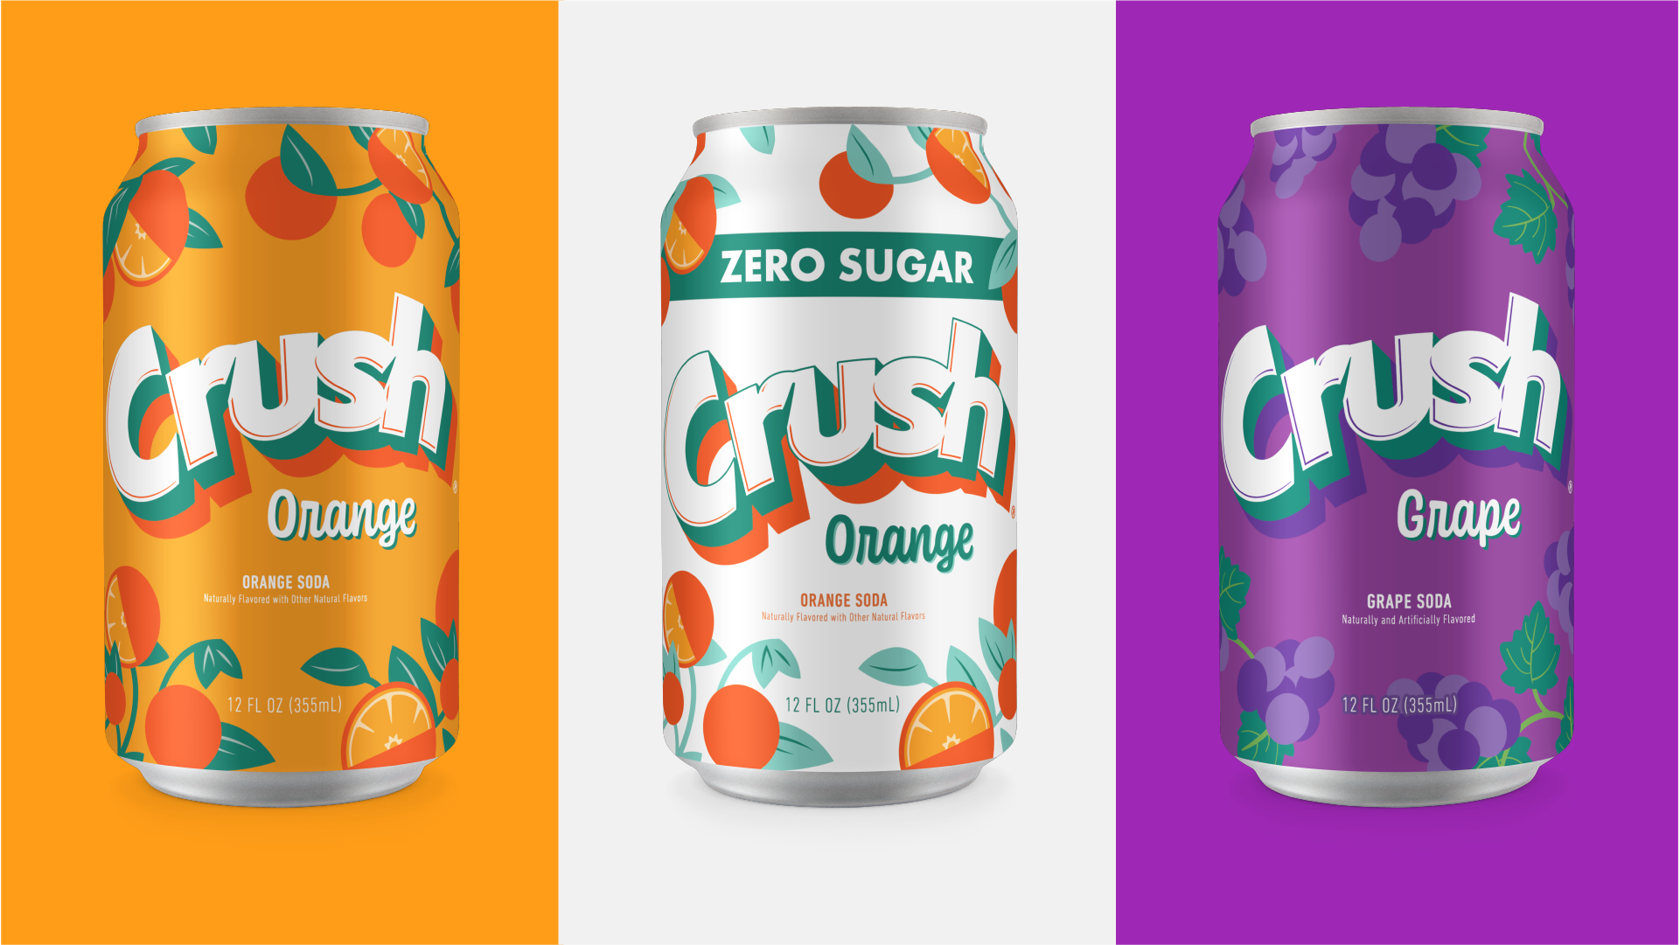 Crush Soda S Refreshingly Fun New Look Dieline Design Branding Packaging Inspiration